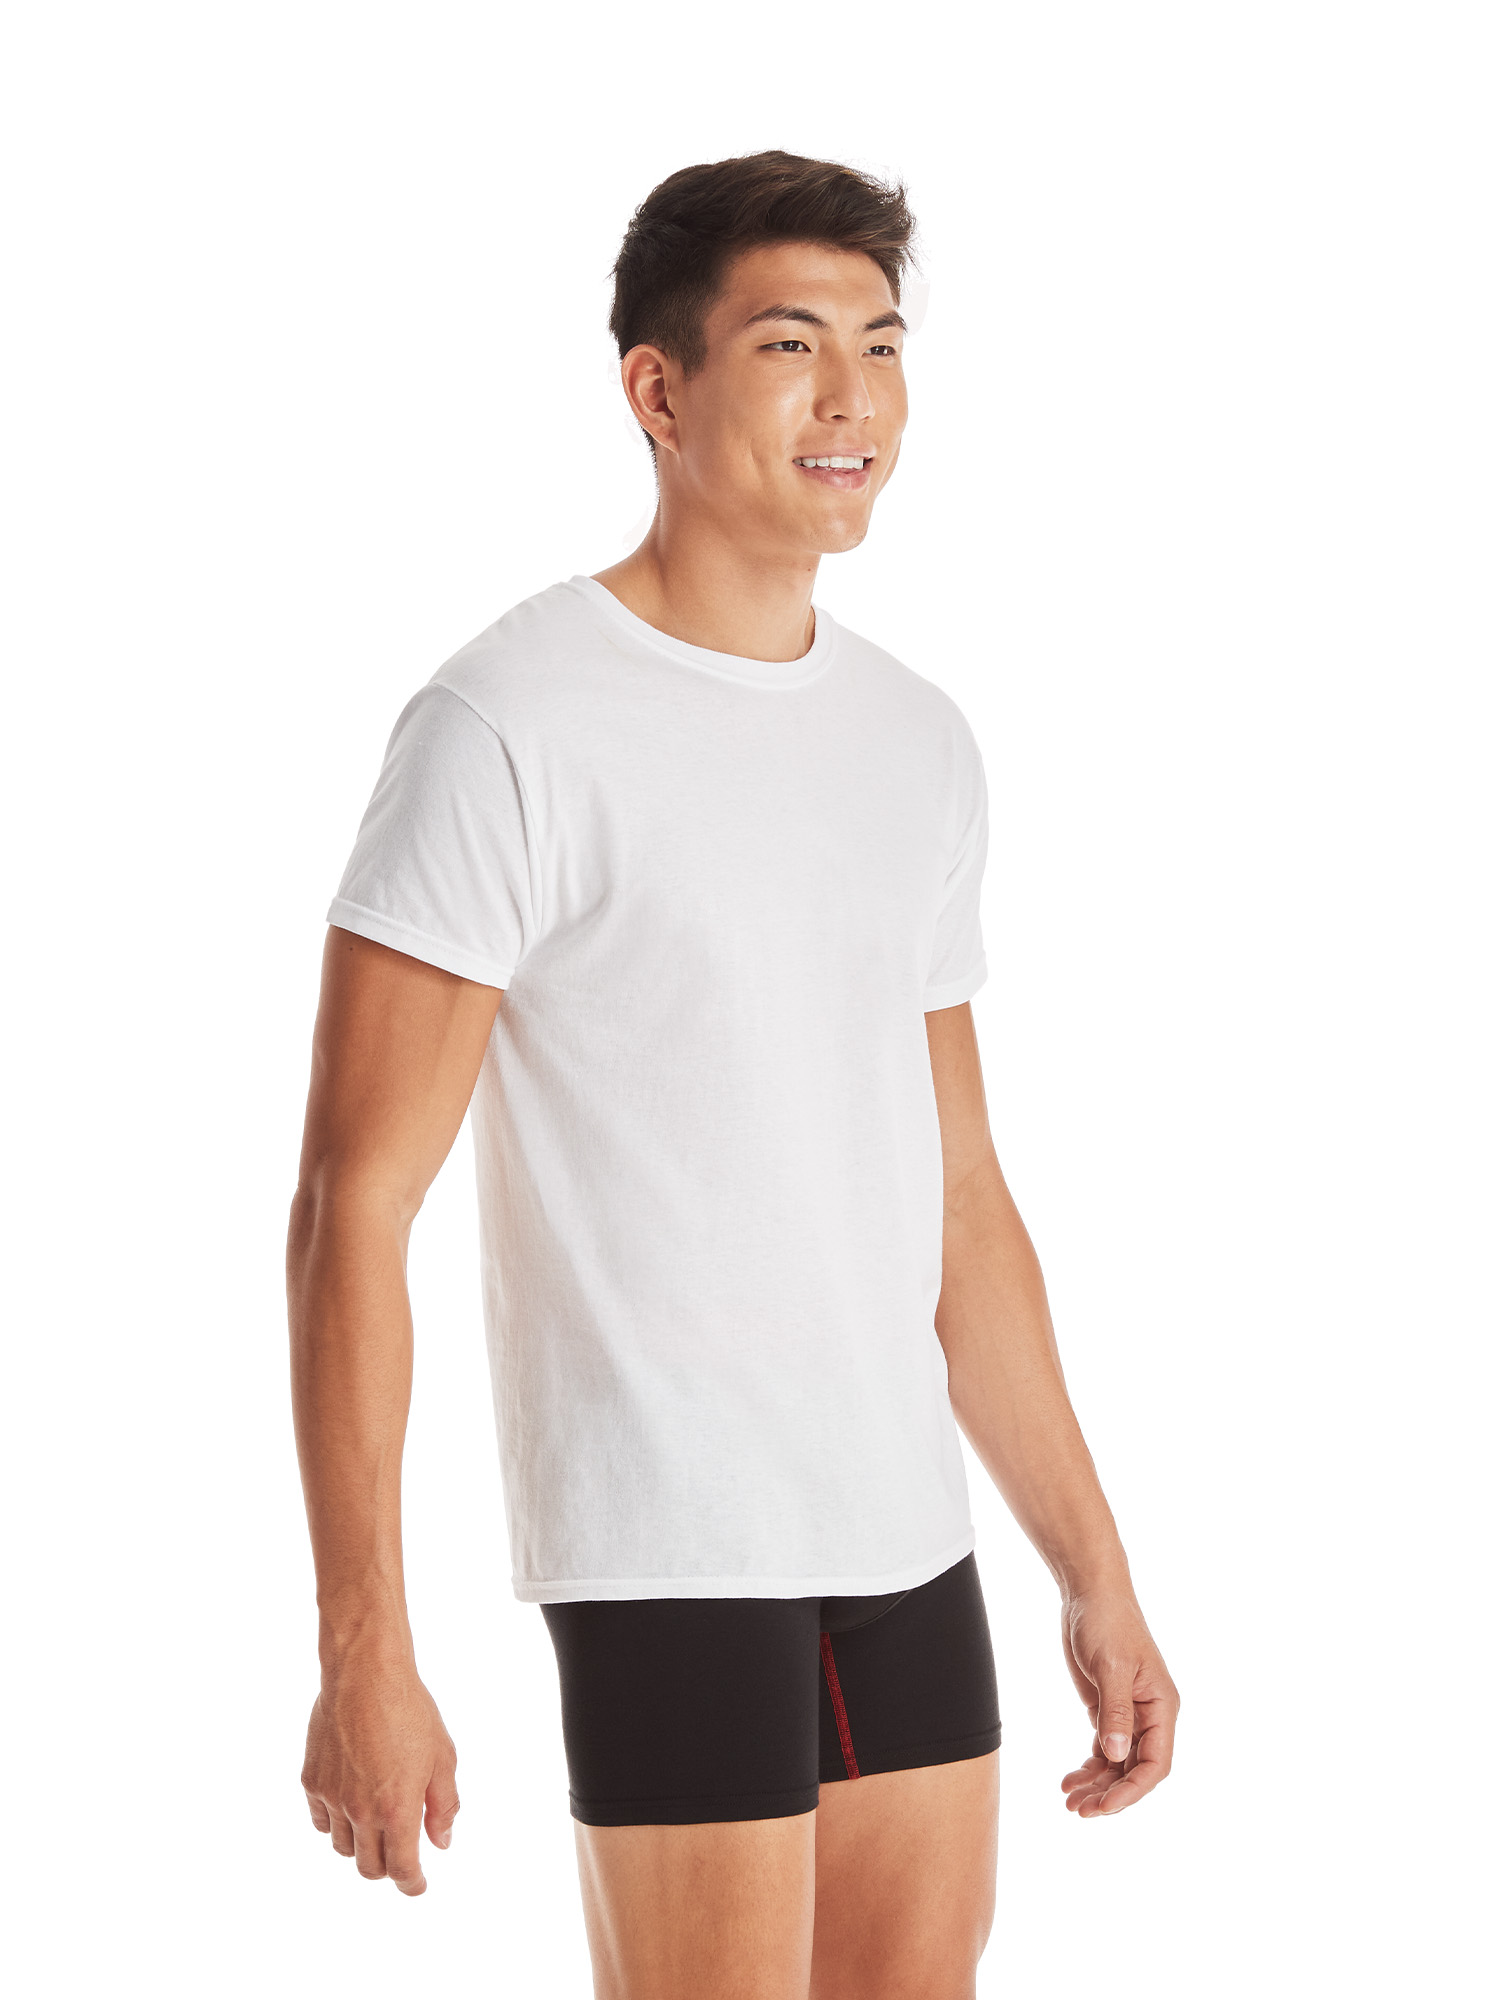 Hanes Men's White Crew T-Shirt Undershirts, 3 Pack - image 5 of 9